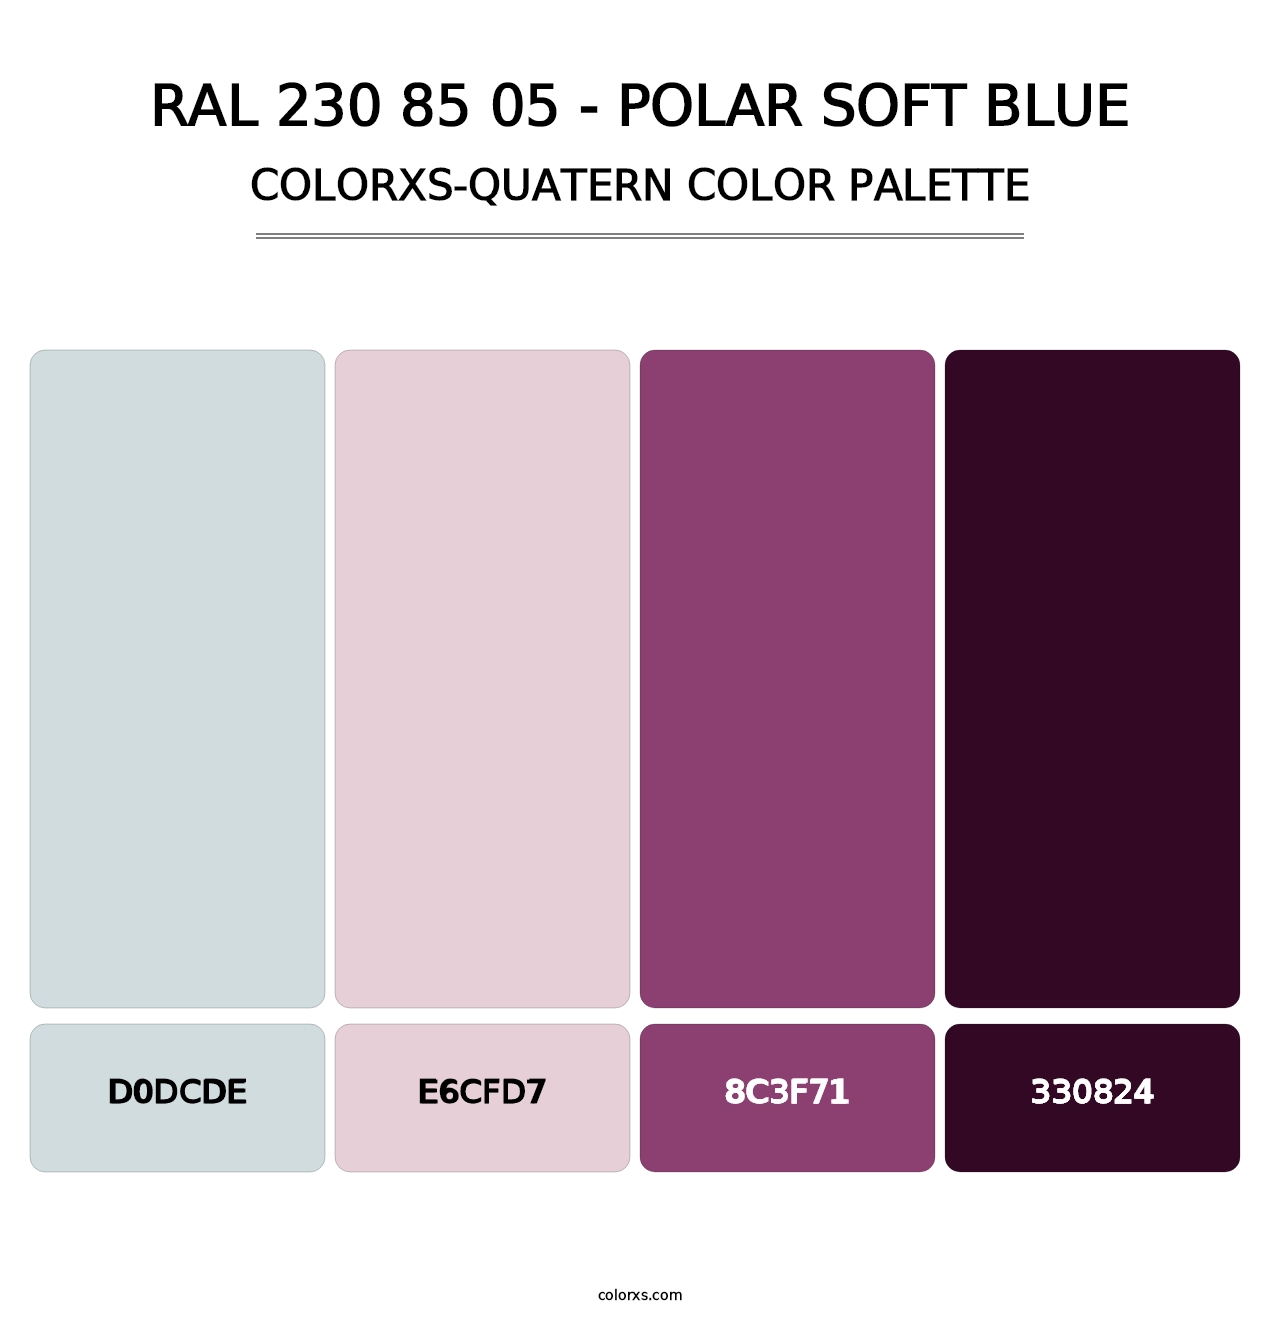 RAL 230 85 05 - Polar Soft Blue - Colorxs Quatern Palette